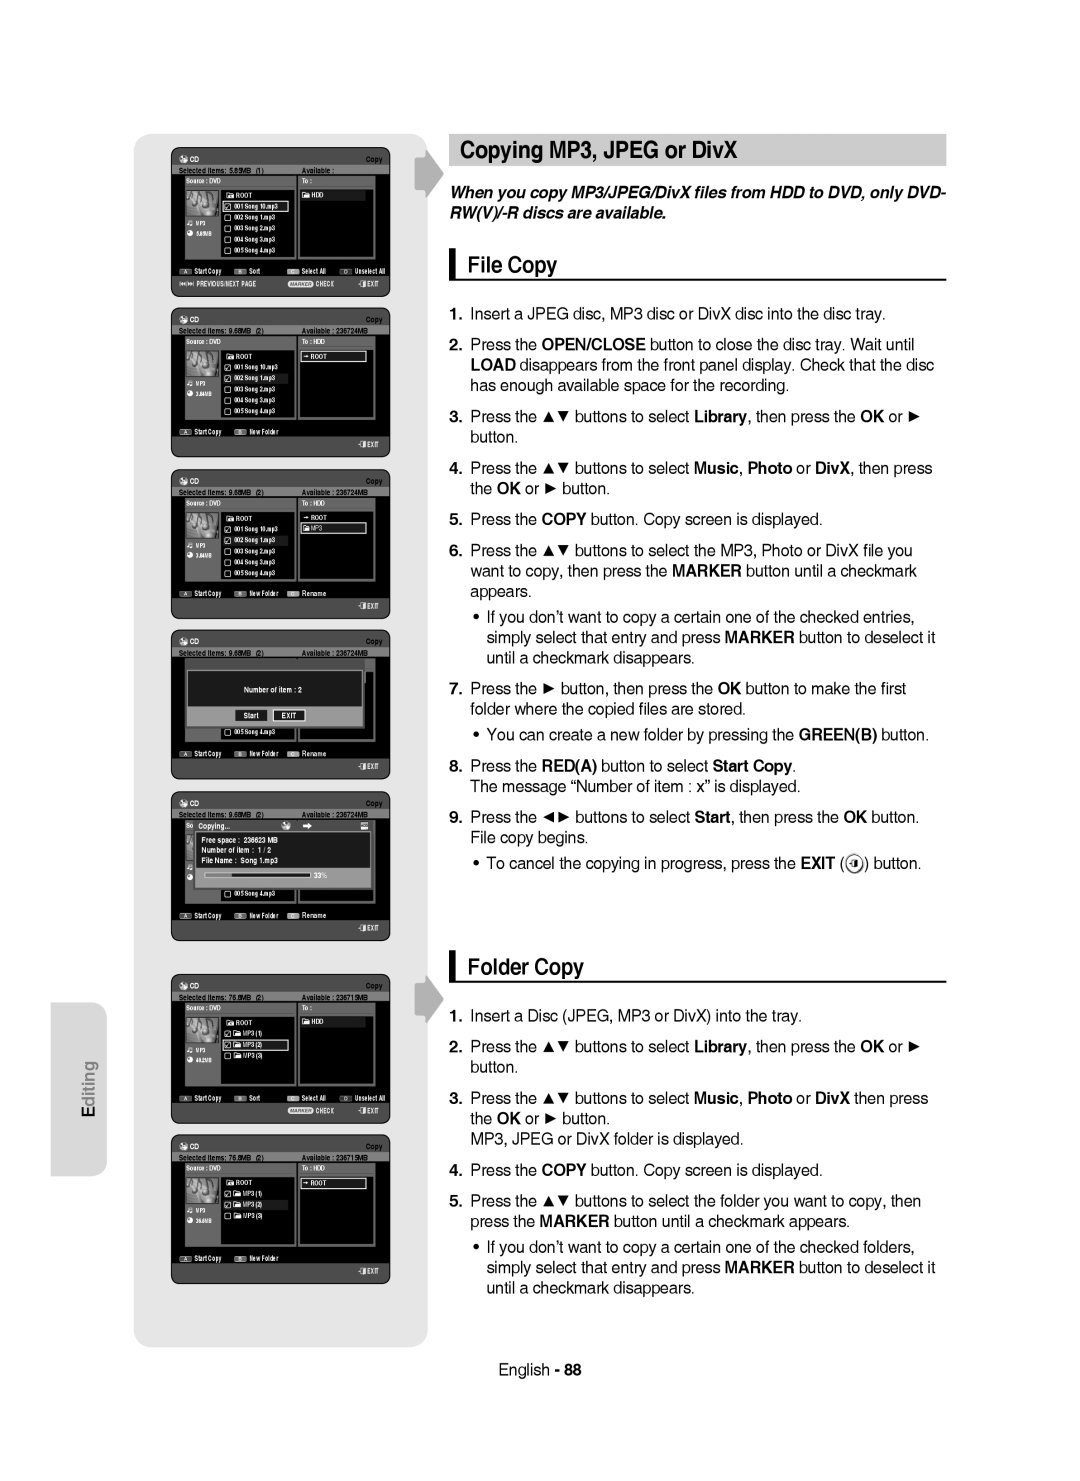 Samsung DVD-HR750/XEB, DVD-HR750/XEG, DVD-HR750/AUS manual Copying MP3, Jpeg or DivX, File Copy, Folder Copy 